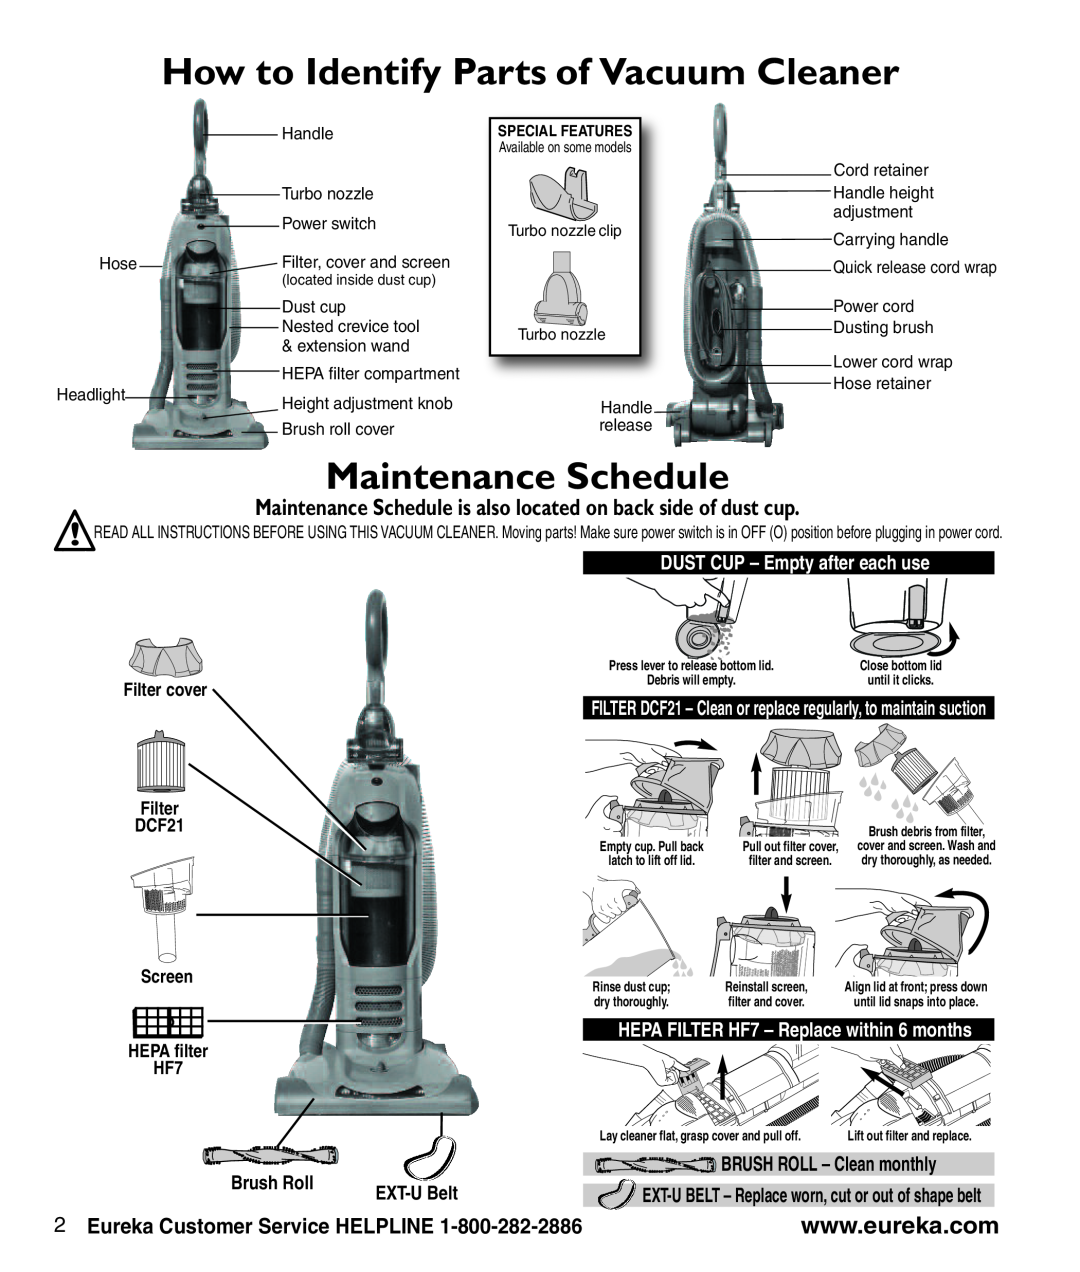 Eureka 3281 How to Identify Parts of Vacuum Cleaner, Maintenance Schedule, Eureka Customer Service HELPLINE, Brush Roll 